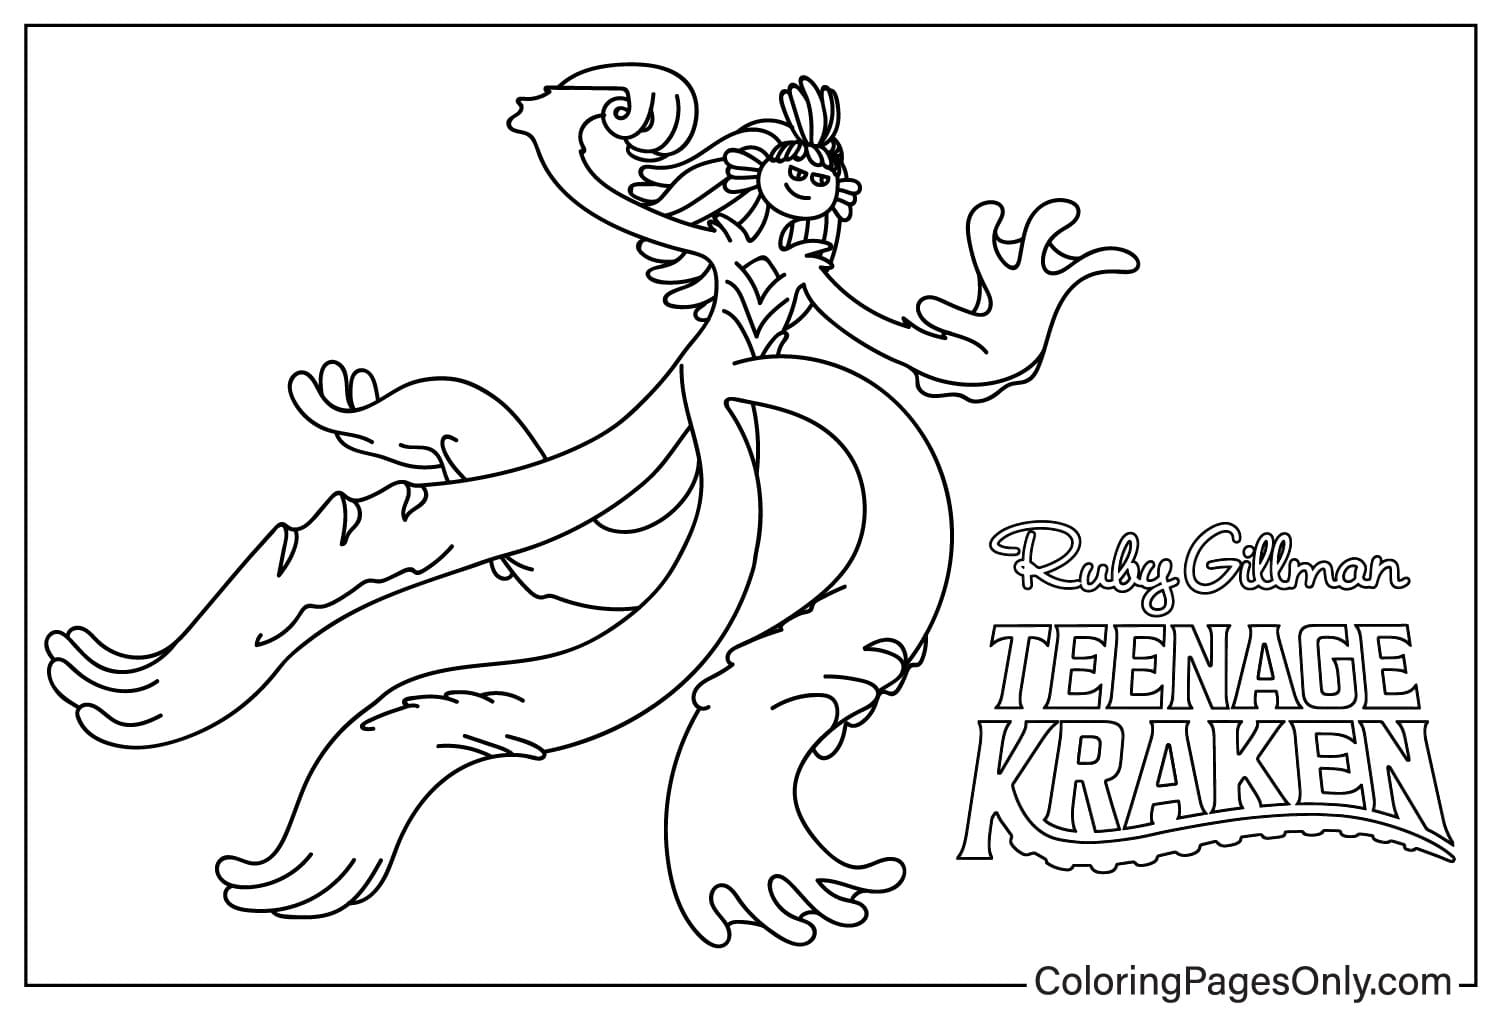 Página para colorear de Agatha Gillman de Ruby Gillman Teenage Kraken